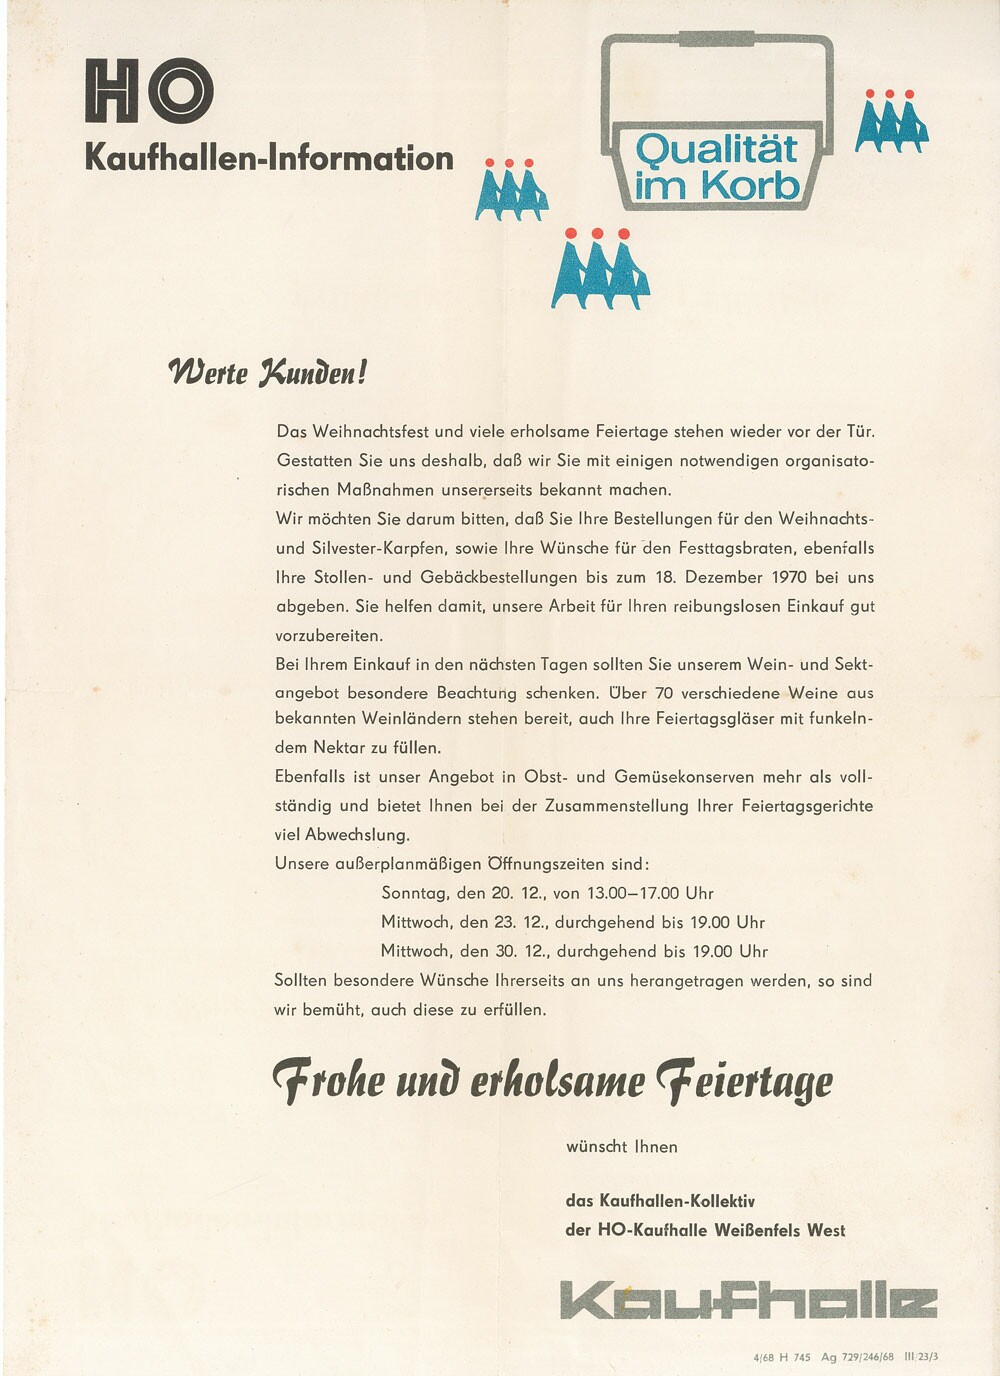 Kaufhallen-Information, HO, 1970 (Museum Weißenfels CC BY-NC-SA)